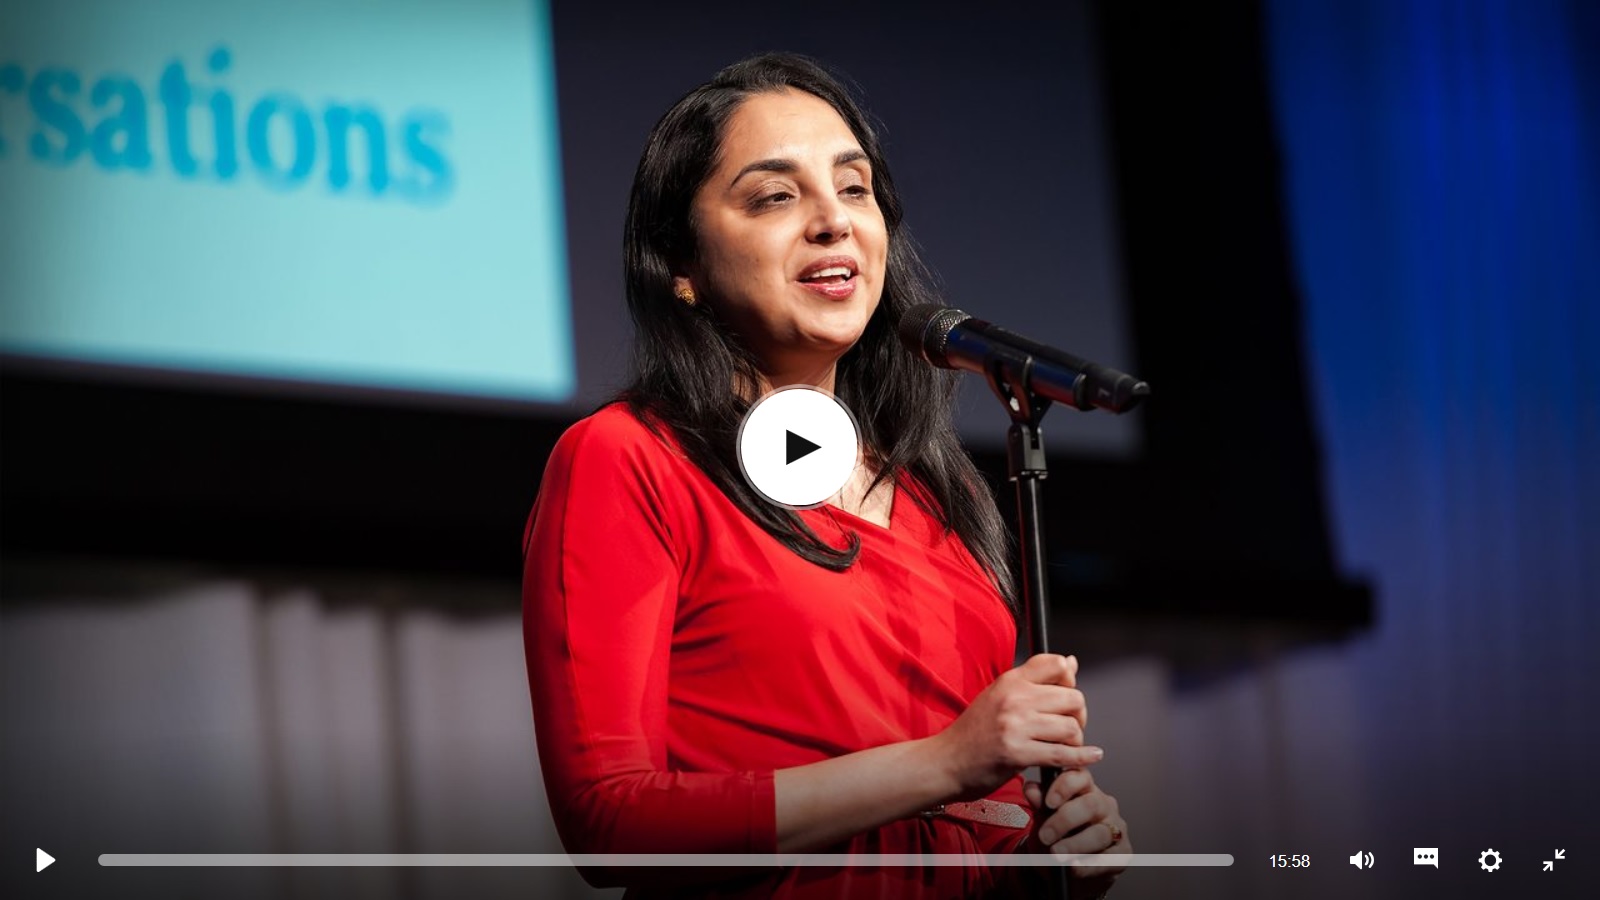 Bekijk de TED Talk van Sheena Iyengar.

Copyright: TED